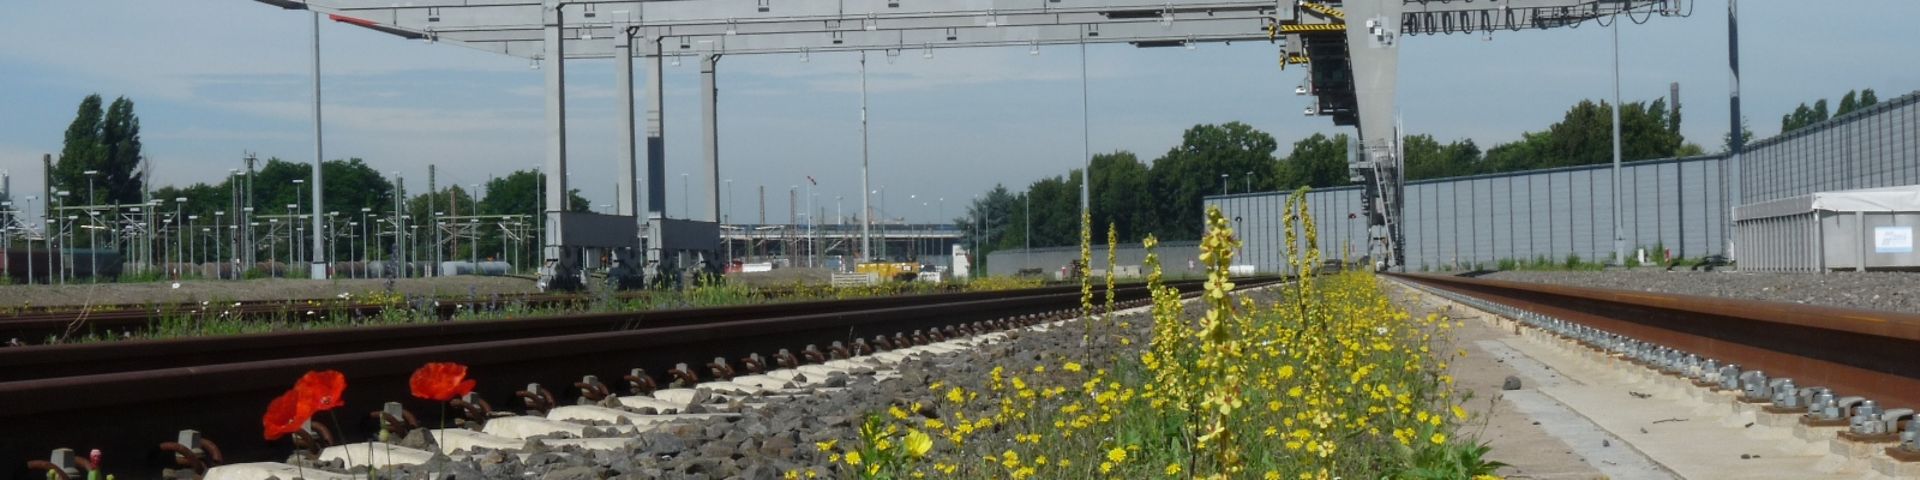 DUSS-Terminal KV-Hub Rhein-Ruhr